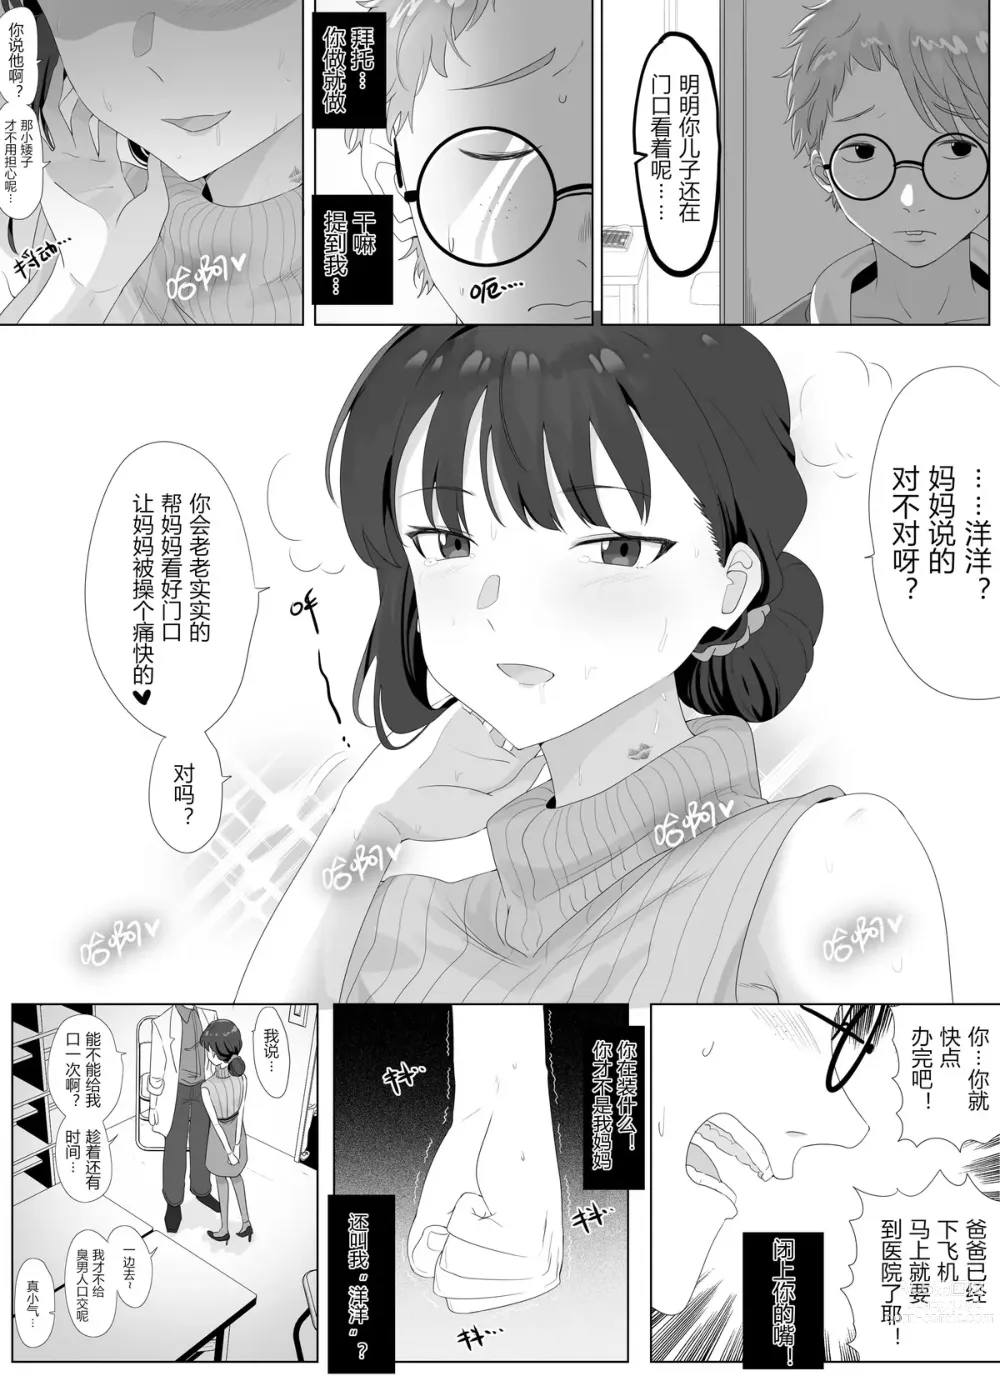 Page 4 of doujinshi 借身还魂